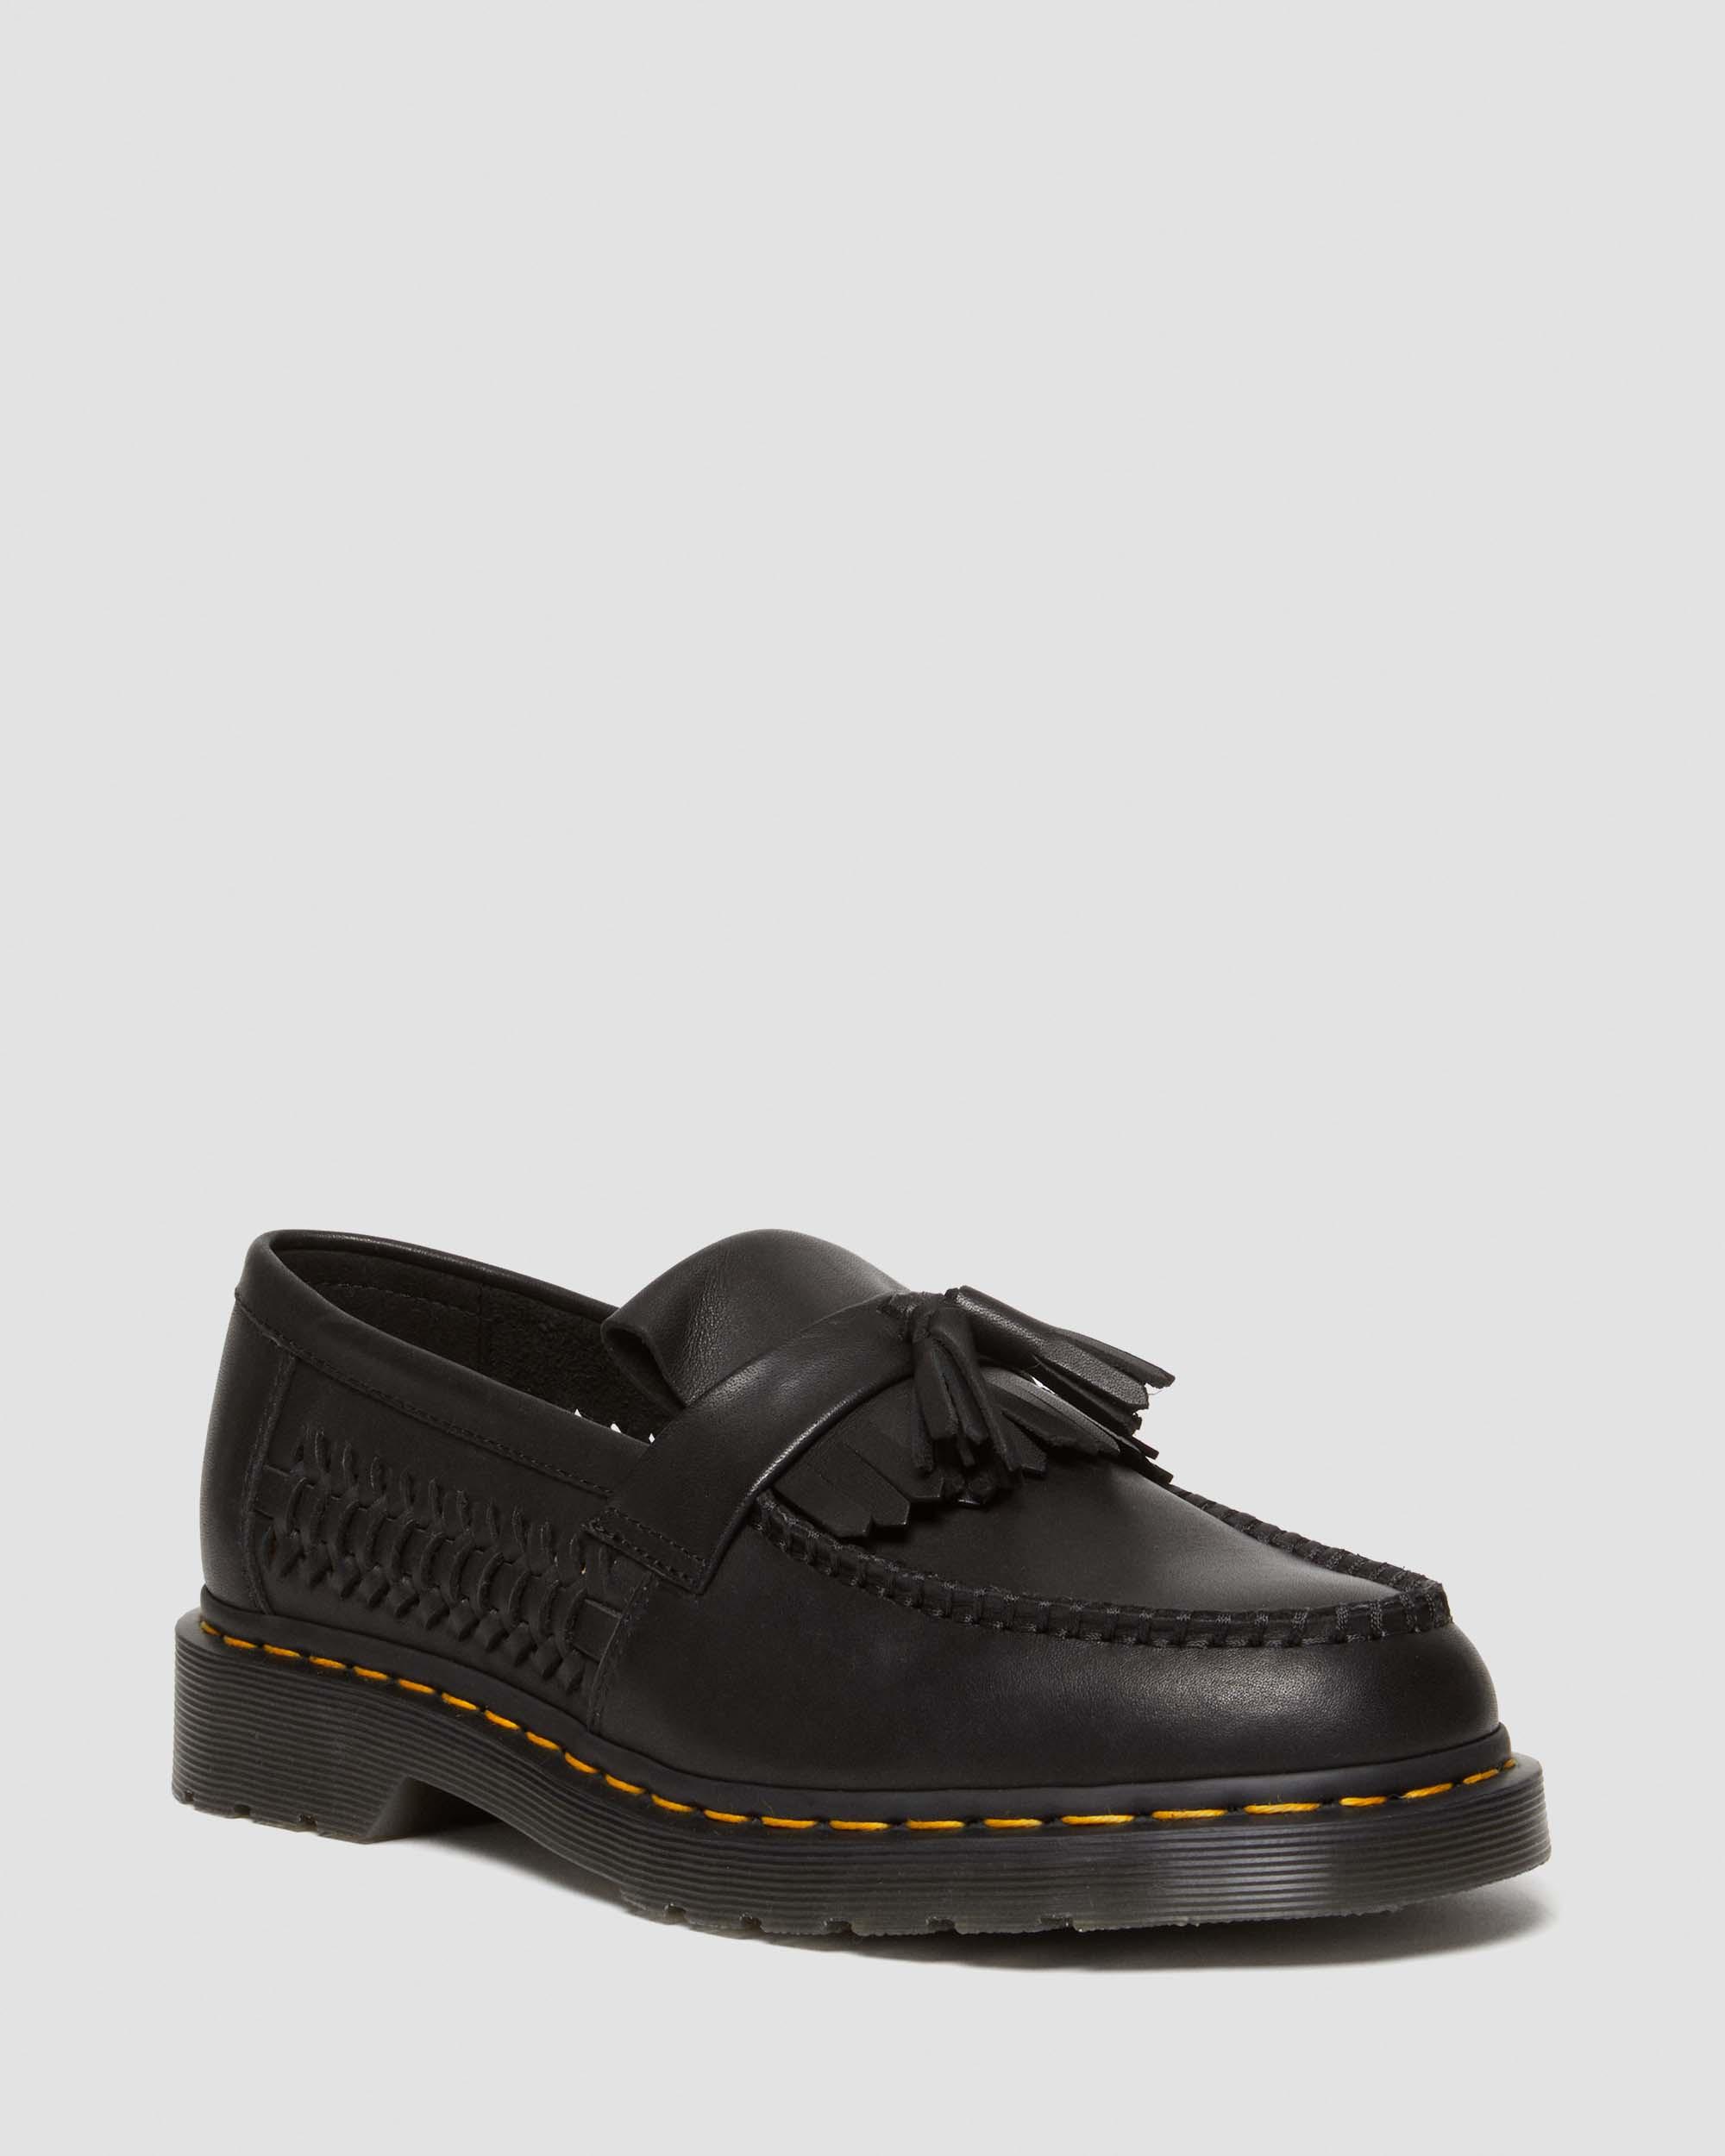 Adrian Woven Leather Tassel Loafers in Black